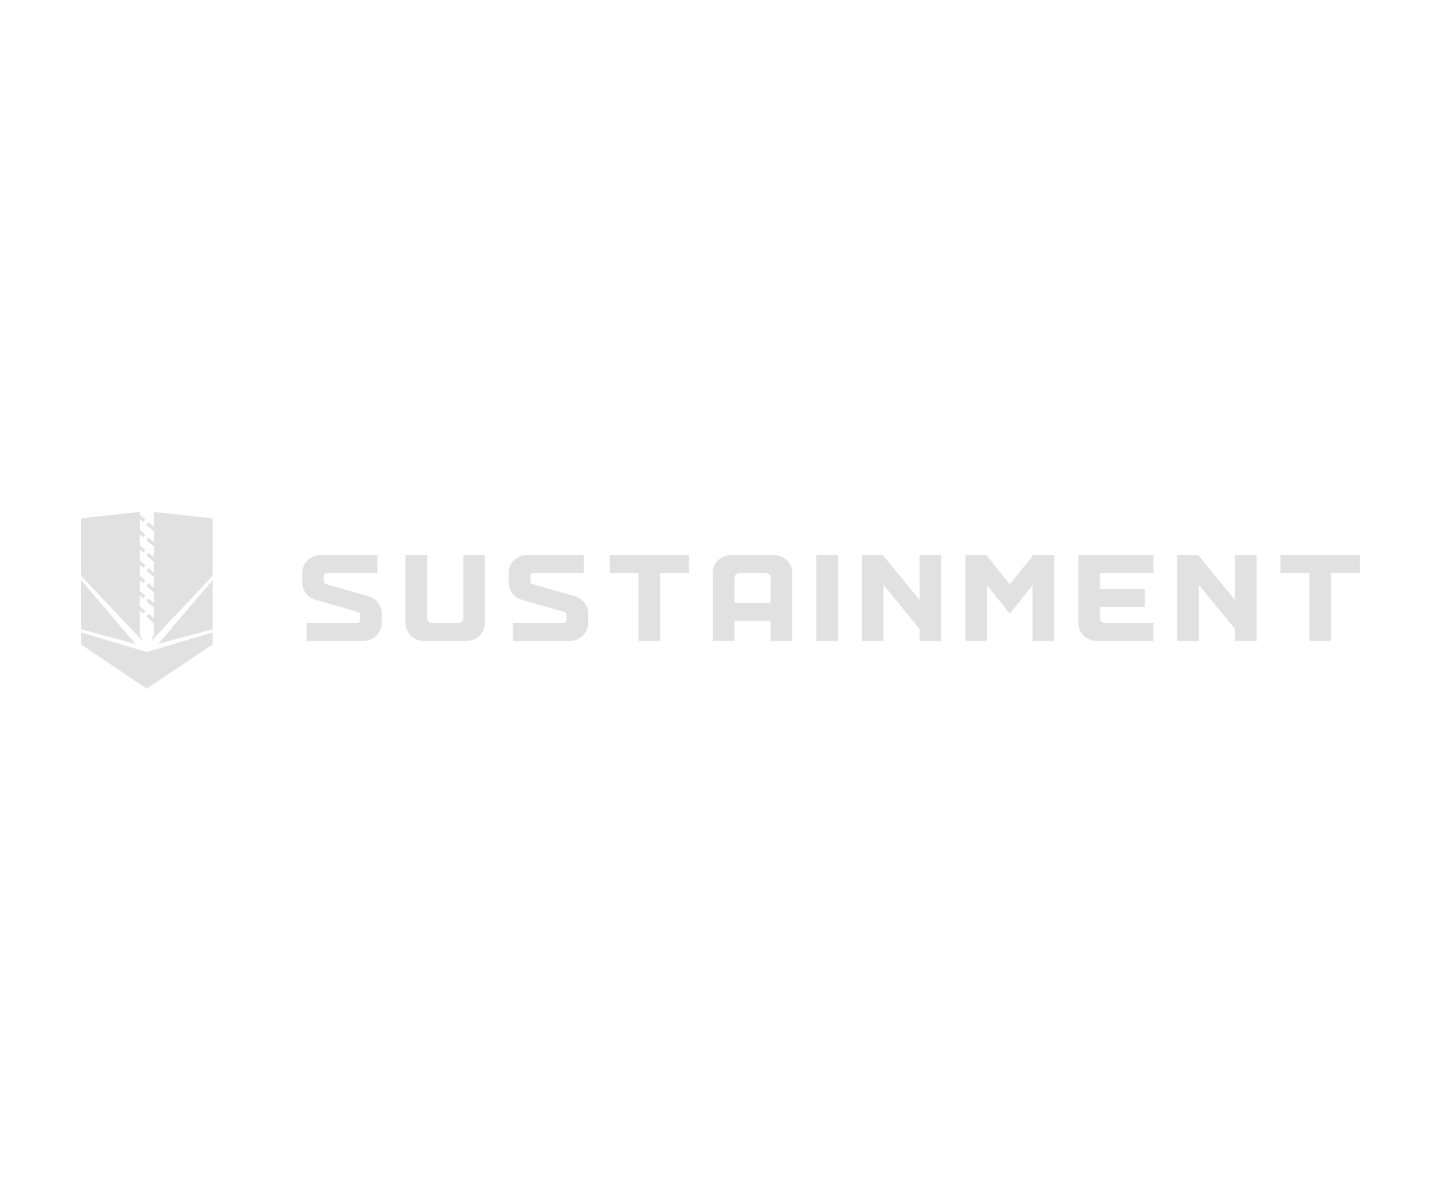 Sustainment